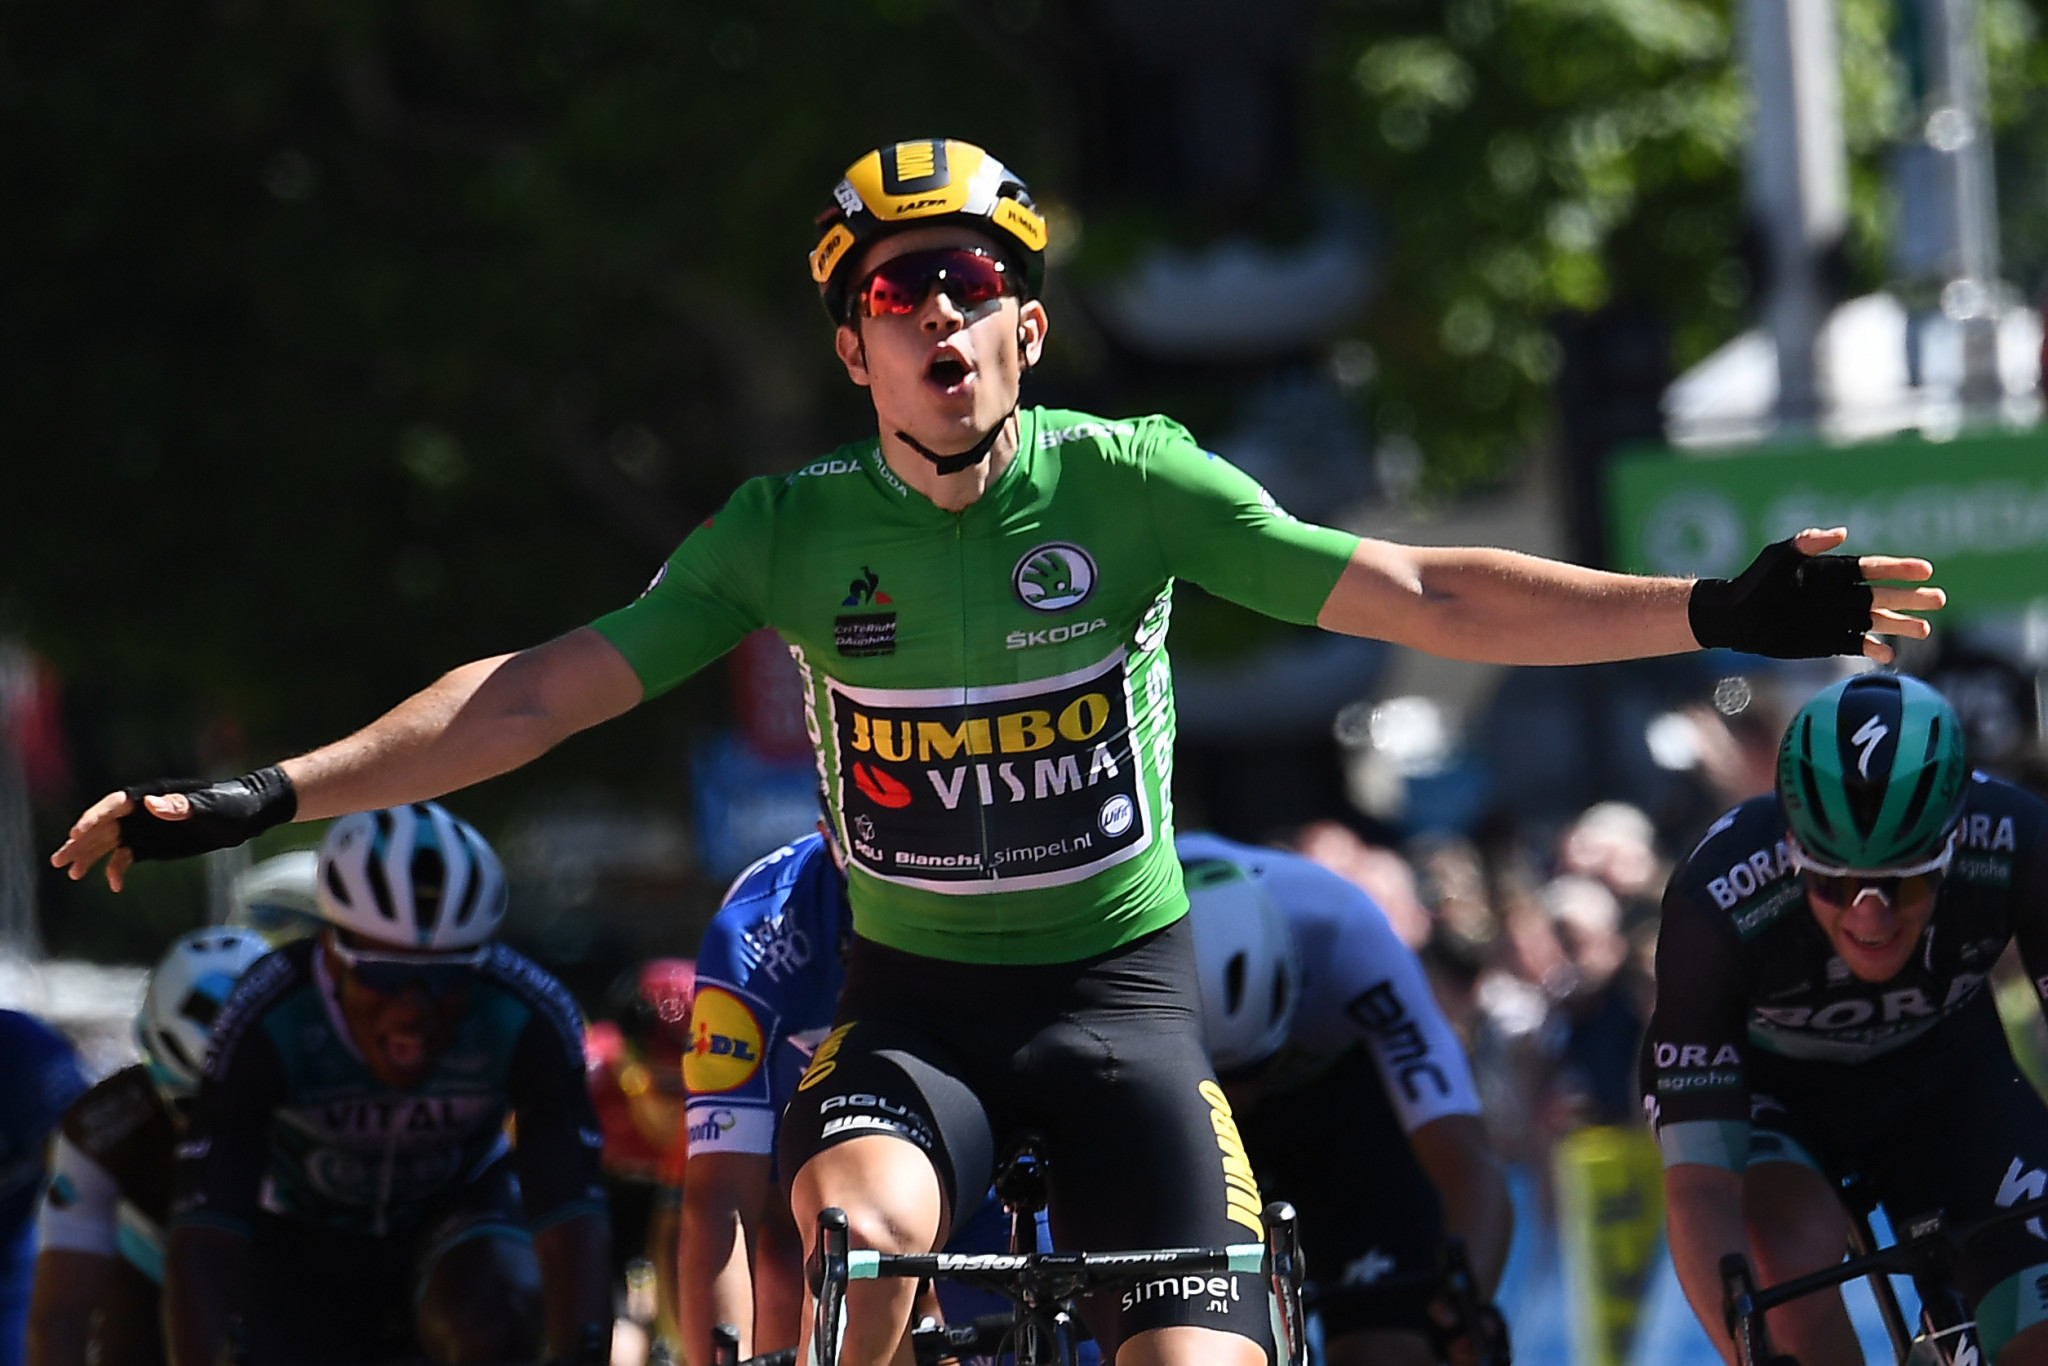 Belgian star van Aert claims second consecutive stage win at Critérium du Dauphiné